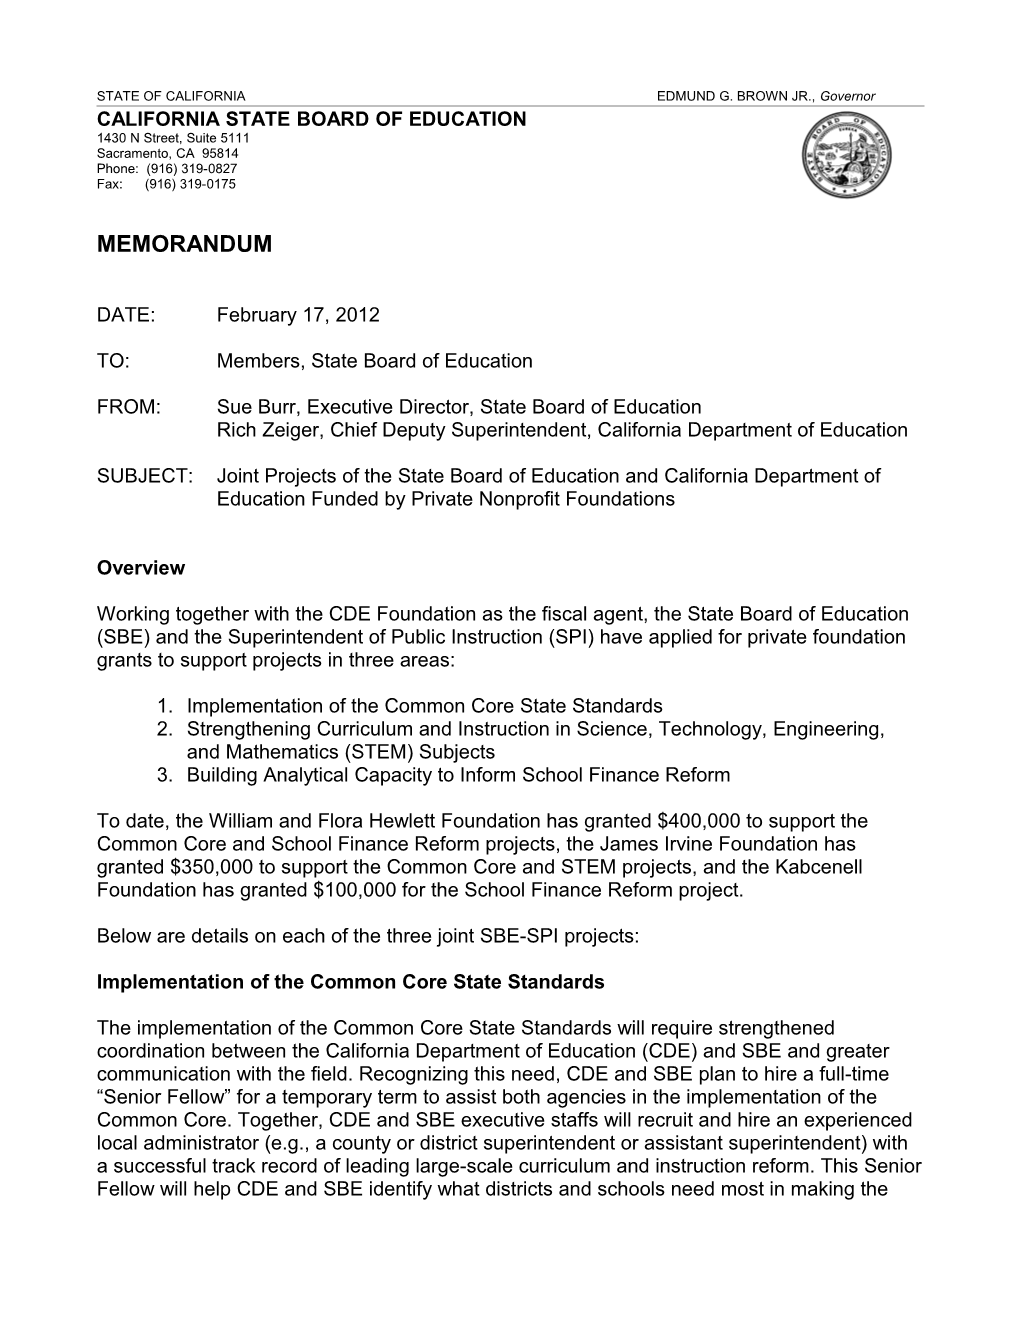 February 2012 Memorandum SBE Item 1 - Information Memorandum (CA State Board of Education)